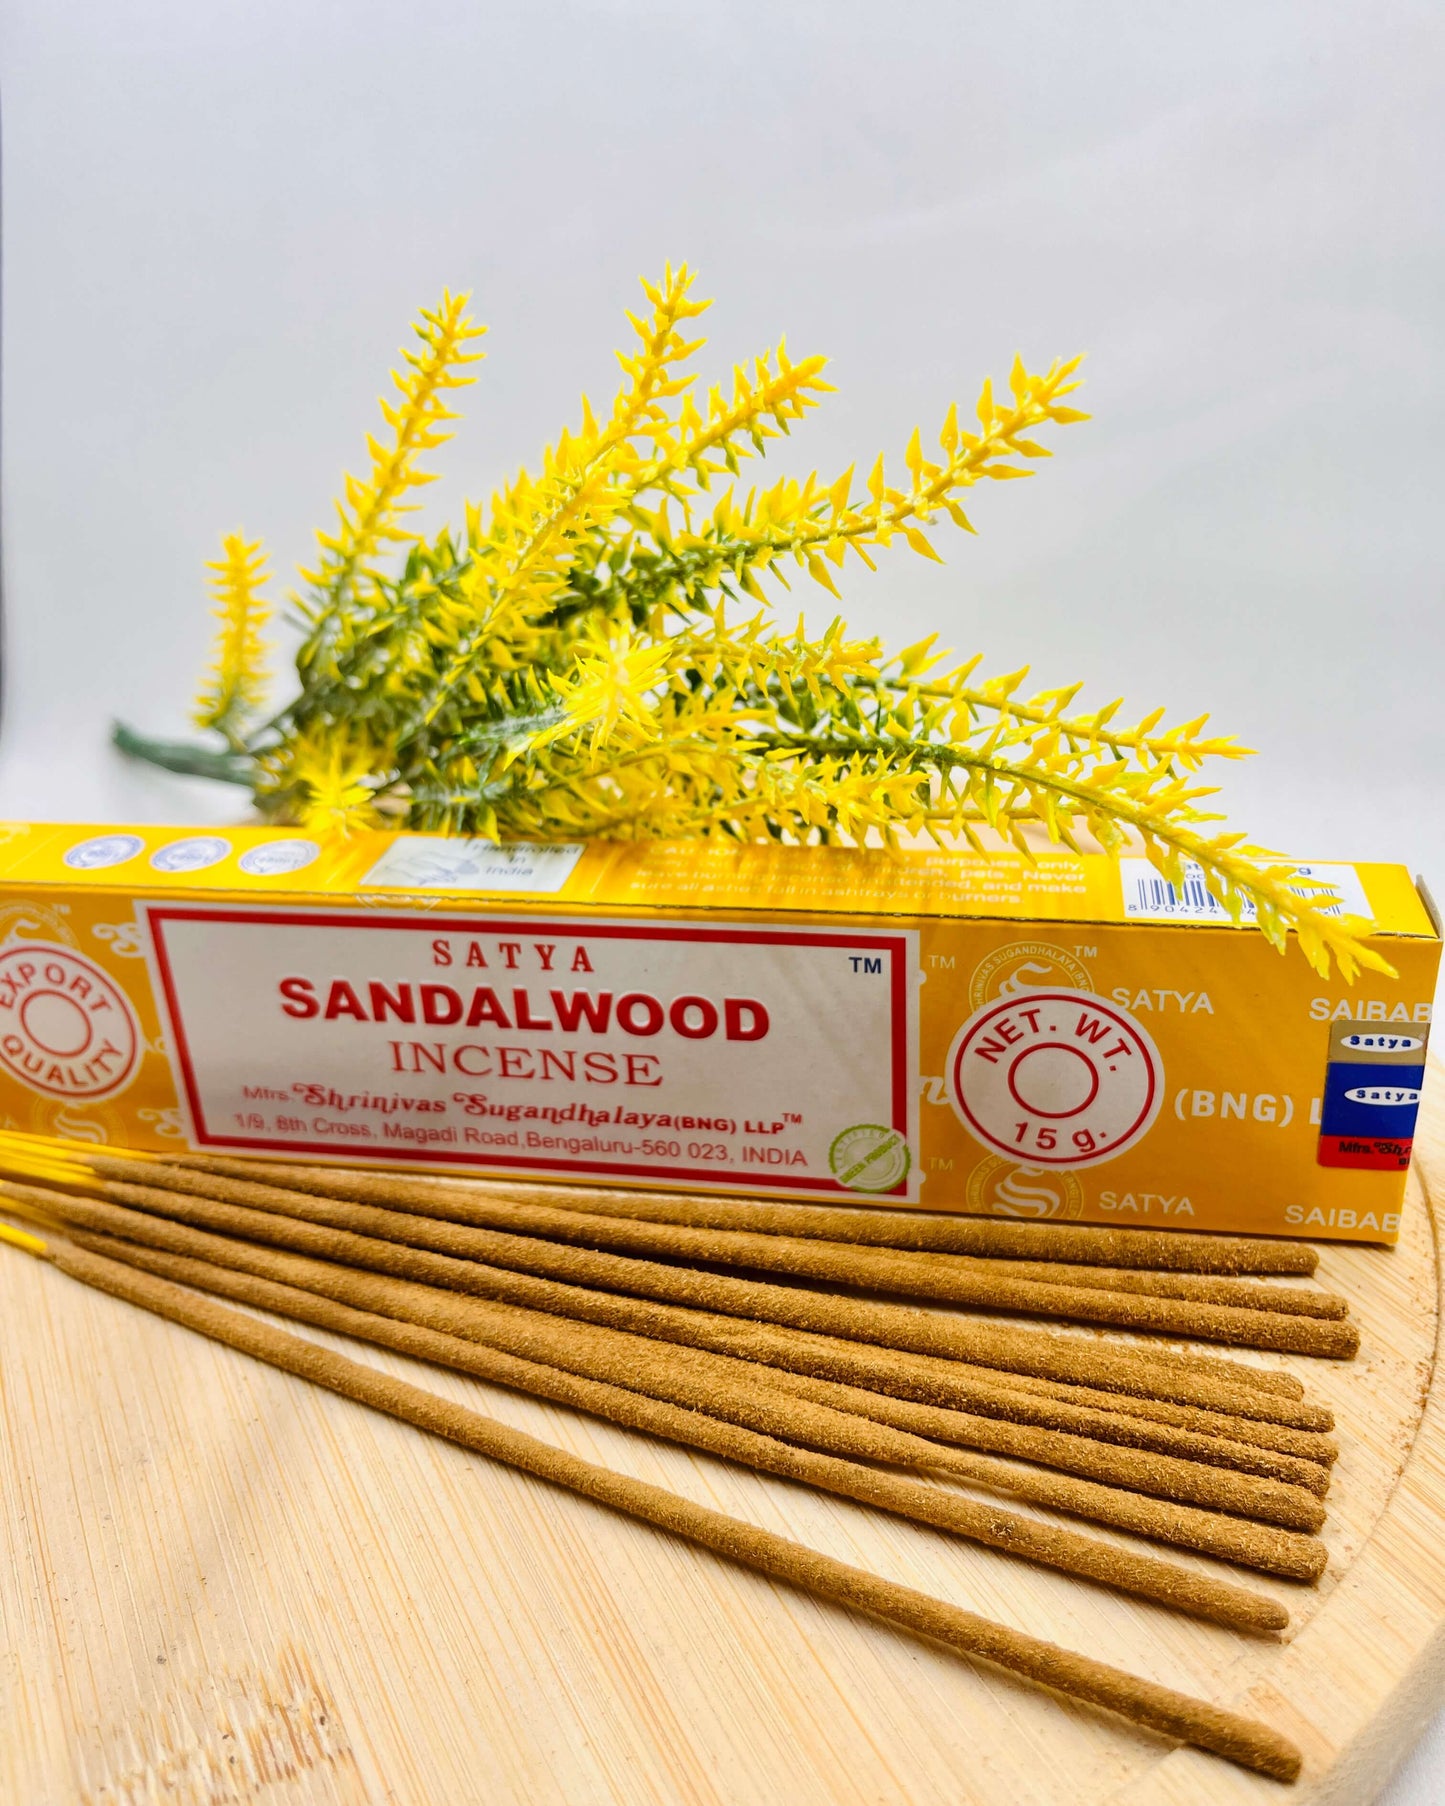 Satya SANDALWOOD Incense